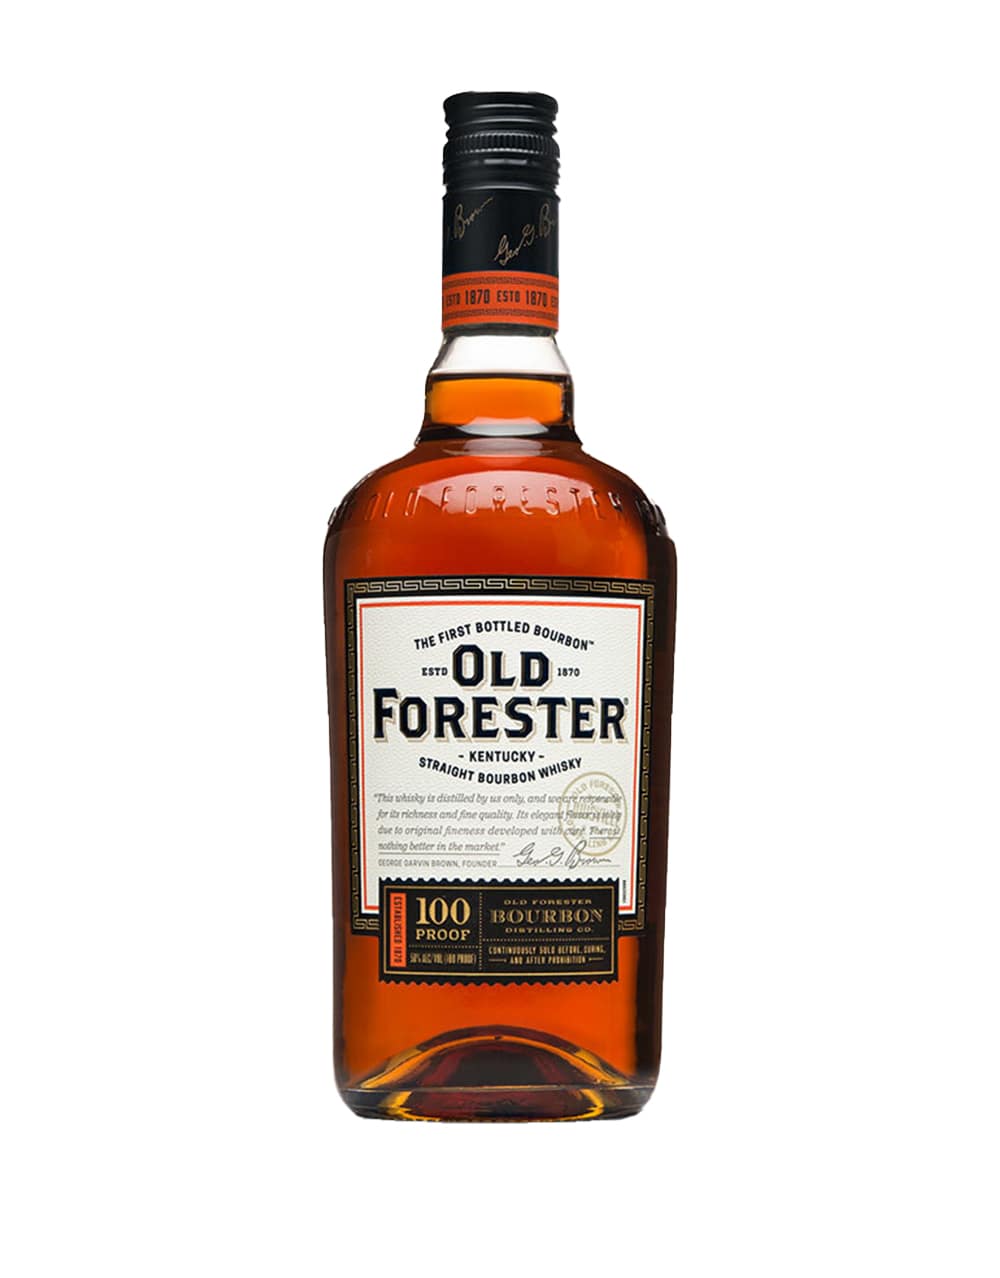 https://royalbatch.com/upload/products/1/old-forester-signature-kentucky-straight-bourbon-whiskey-100-proof_RoyalBatch_pydRpkIOklaM.jpg